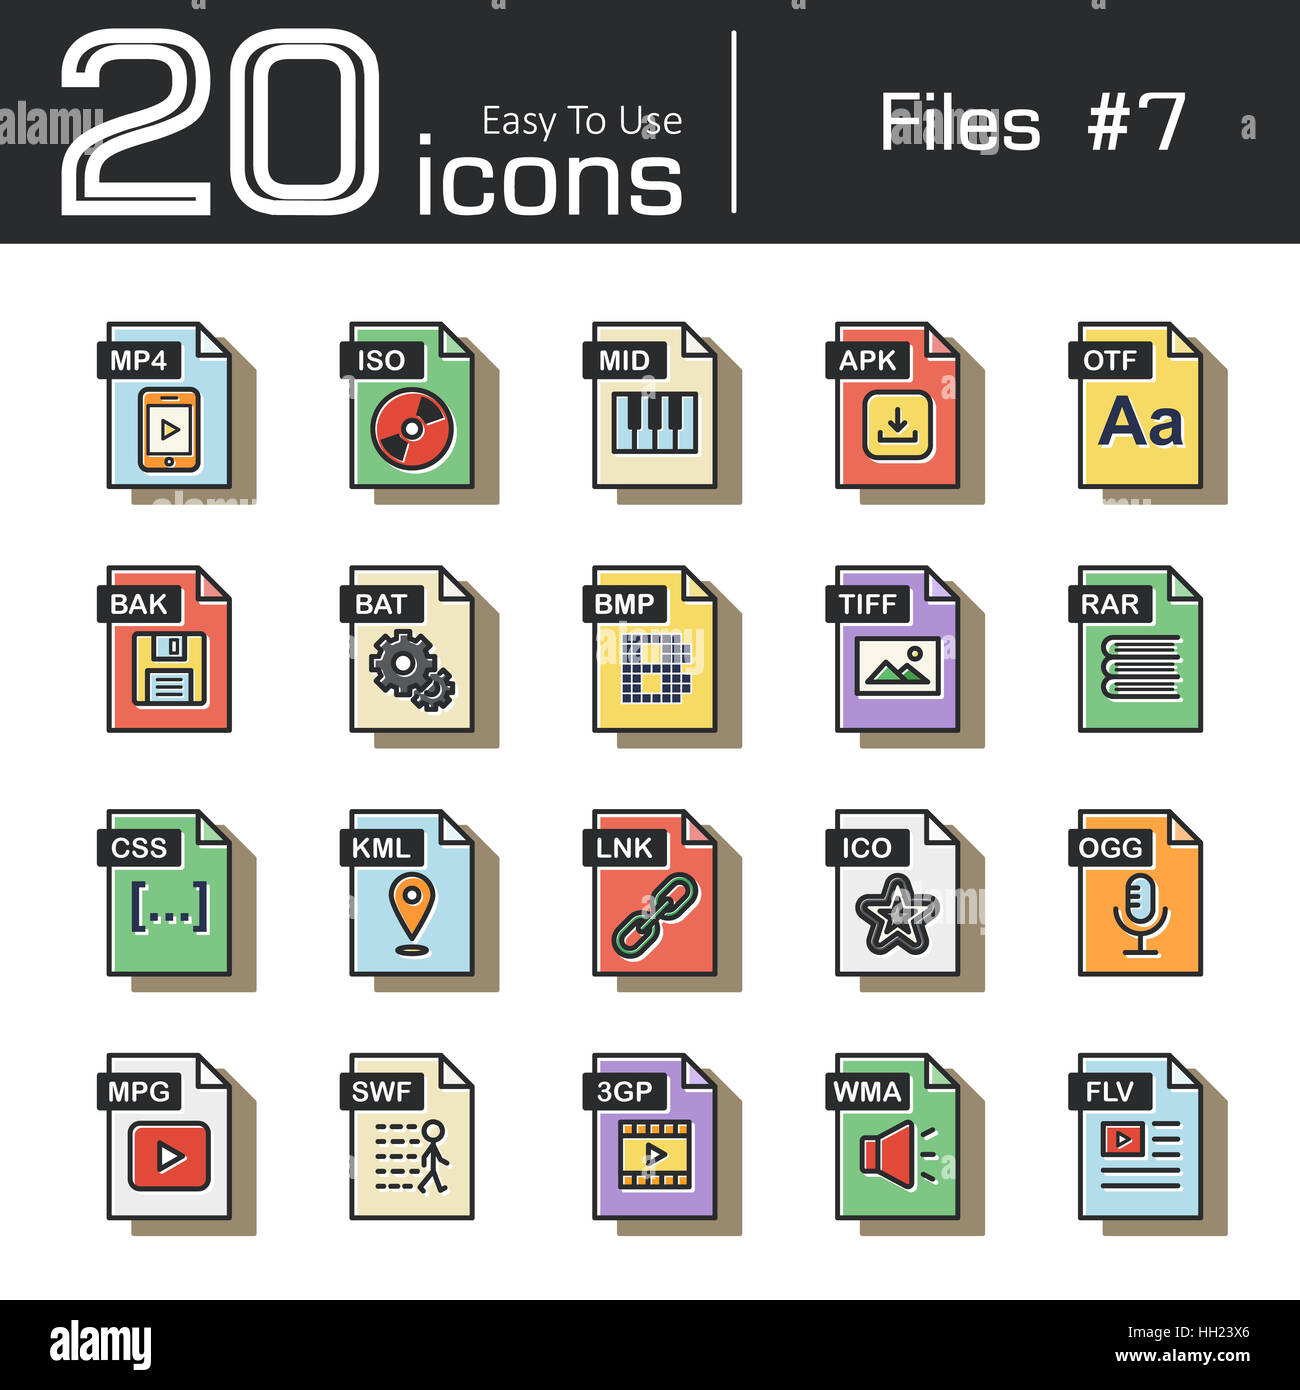 Files icon set 7 ( mp4 , iso , mid , apk , otf , bak , bat , bmp , tif ,  rar , css , kml , ink , ico , ogg , mpg , swf , 3gp , wma , flv ) vintage  and Stock Photo - Alamy